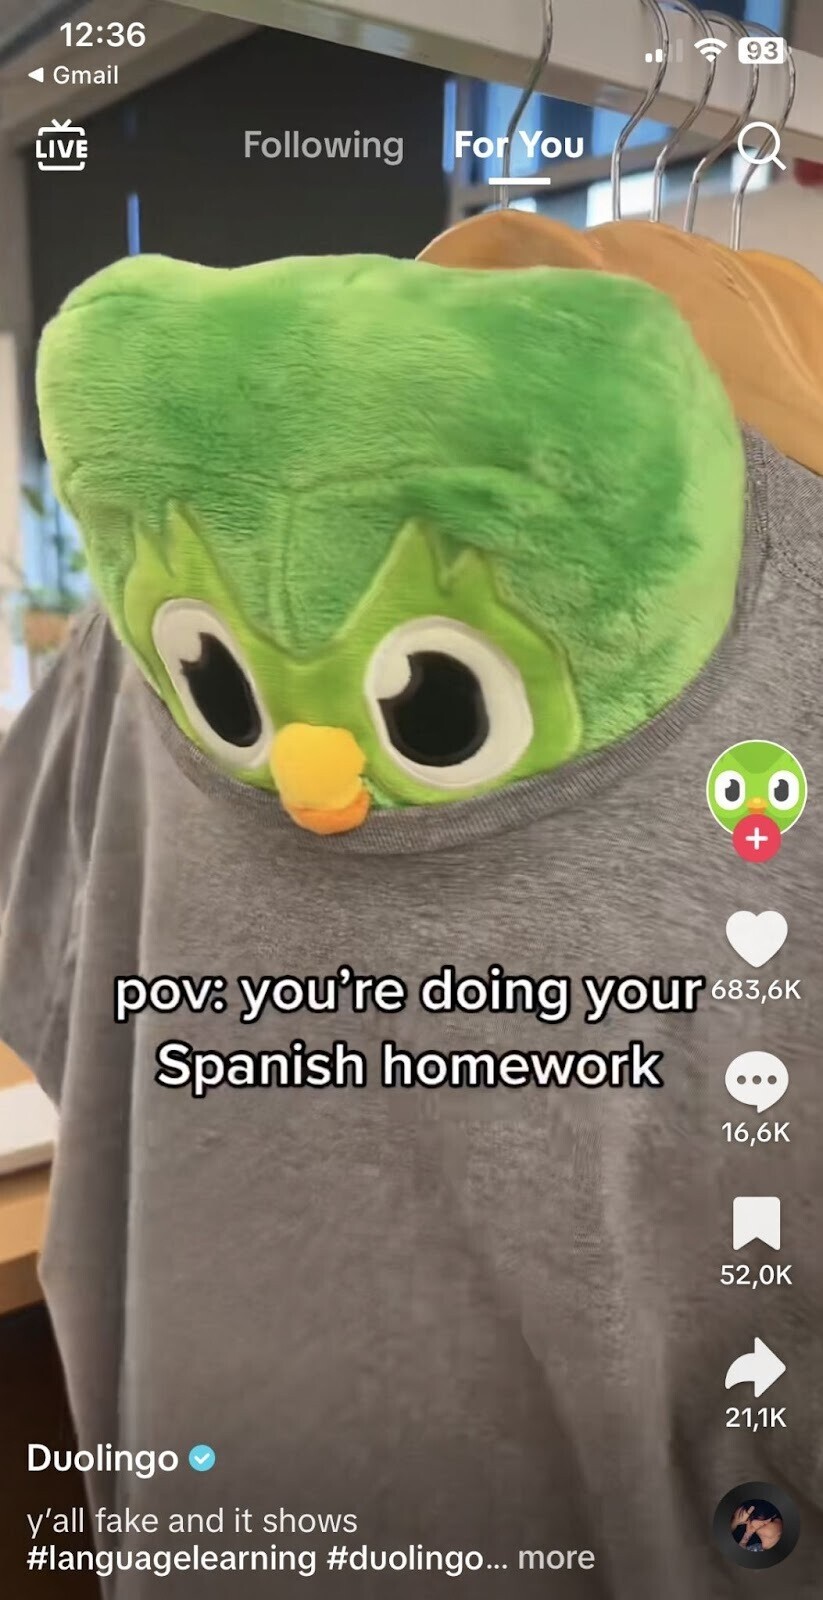 TikTok video by Duolingo with on-screen caption: "pov: you’re doing your Spanish homework"